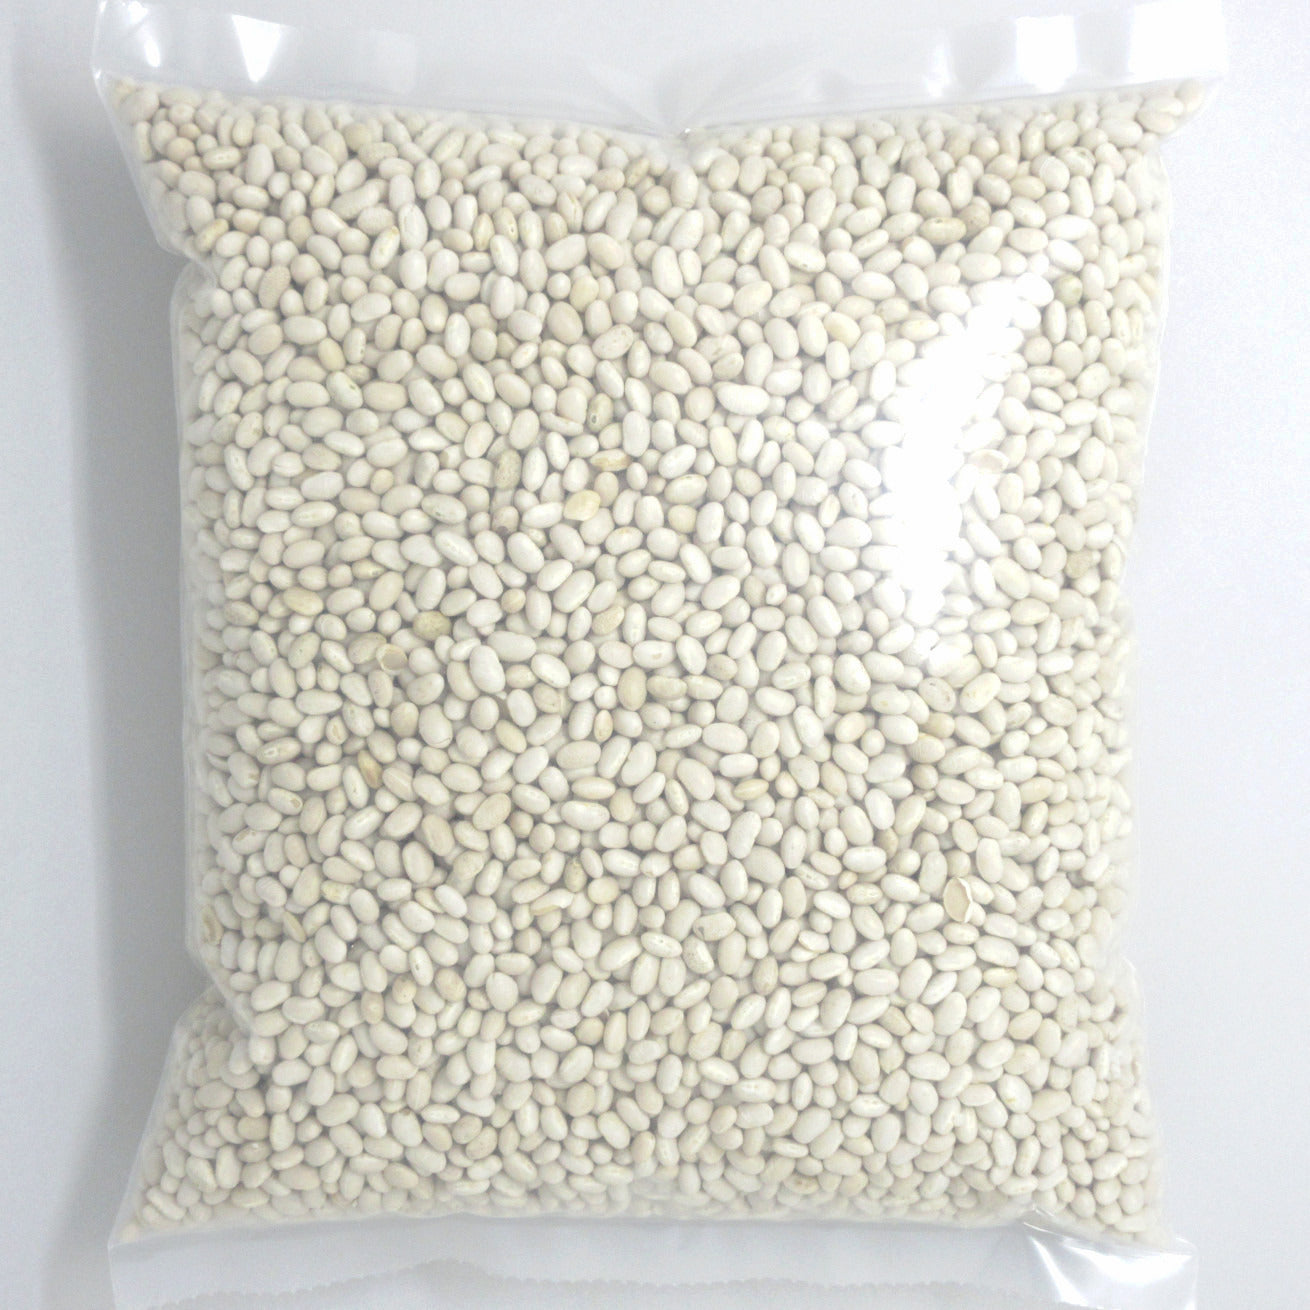 Flour Barrel product image - Navy Beans